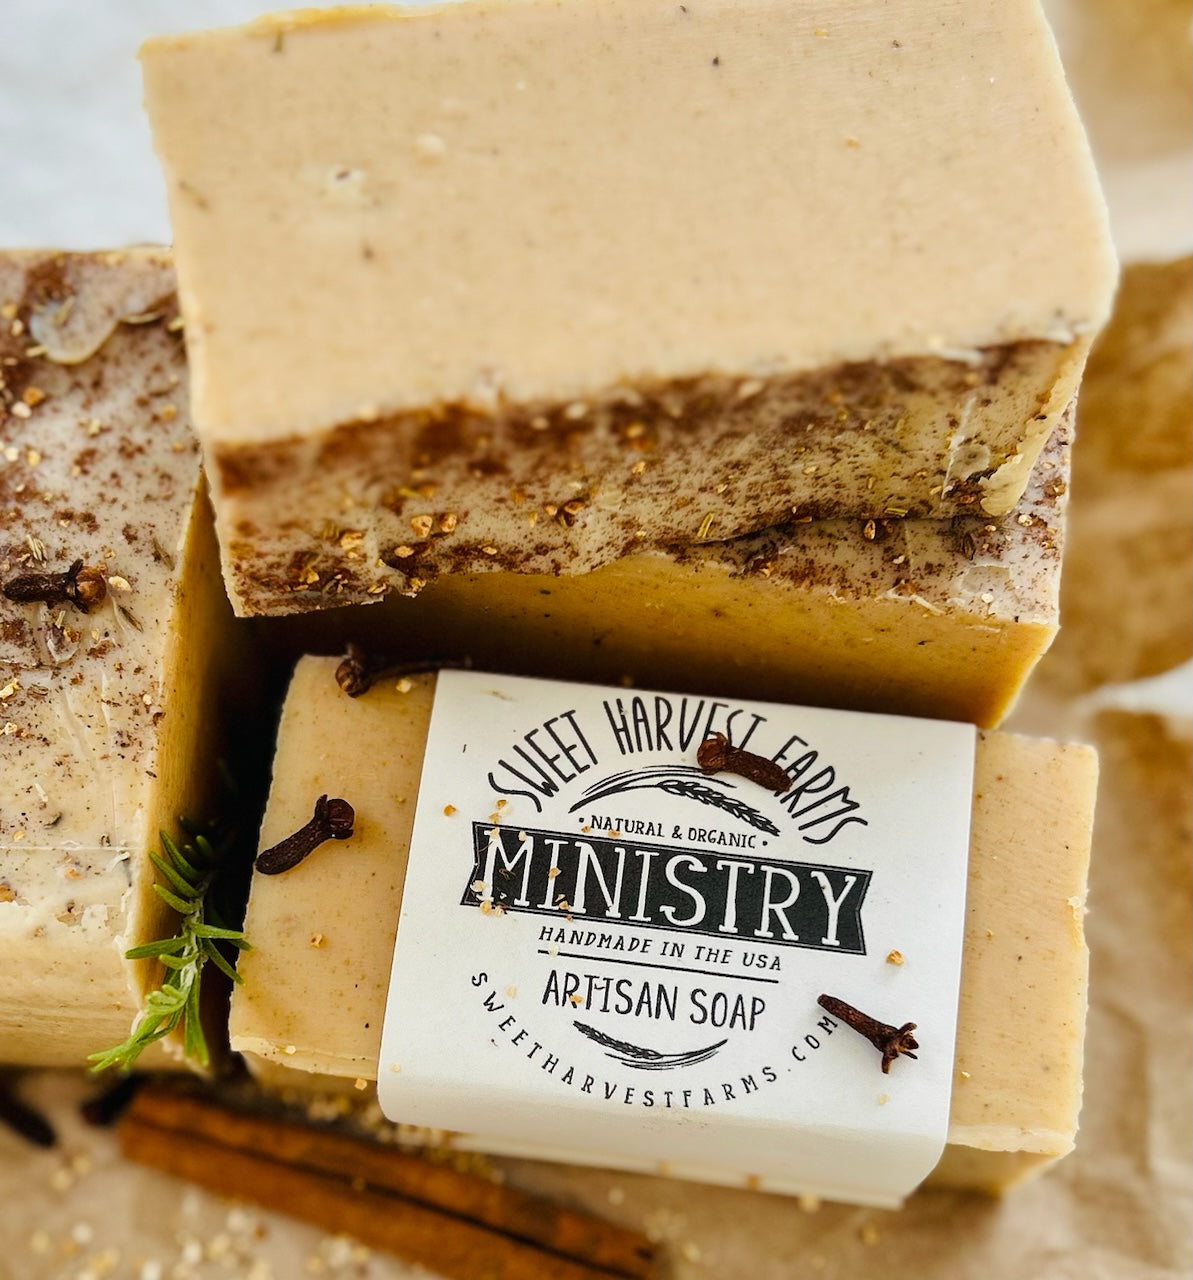 Wholesale Ministry - Organic Handmade Ministry Soap - Minimum 6 bars-0